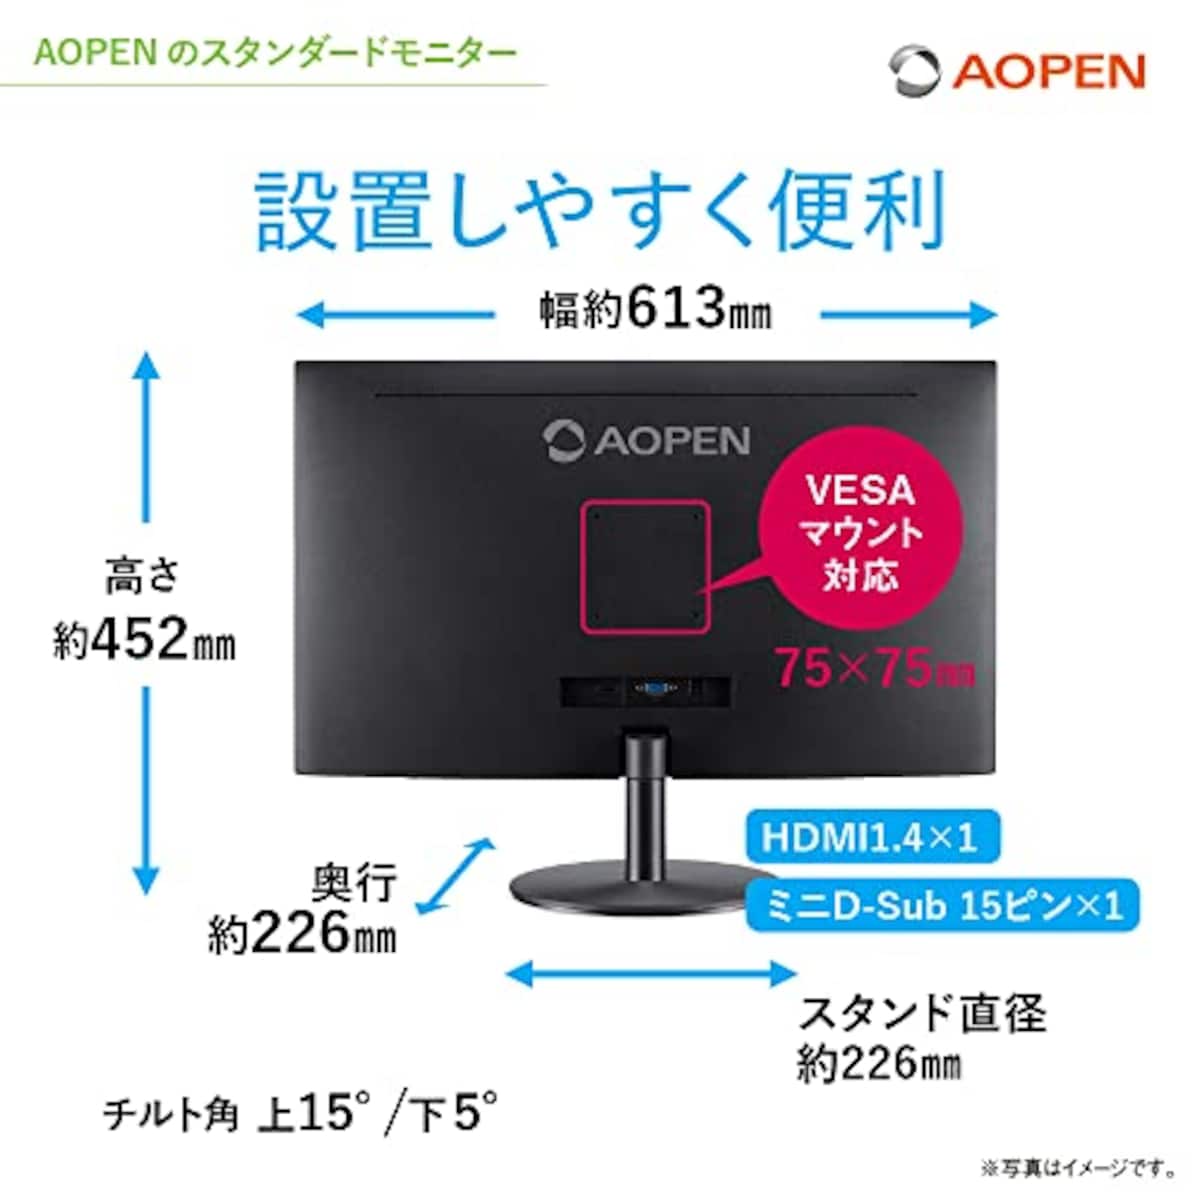  AOPEN Acer スタンダードモニター 27インチ 27E1bi フルHD IPS 75Hz 5ms(GTG) HDMI ブルーライトシールド 3年保証画像6 